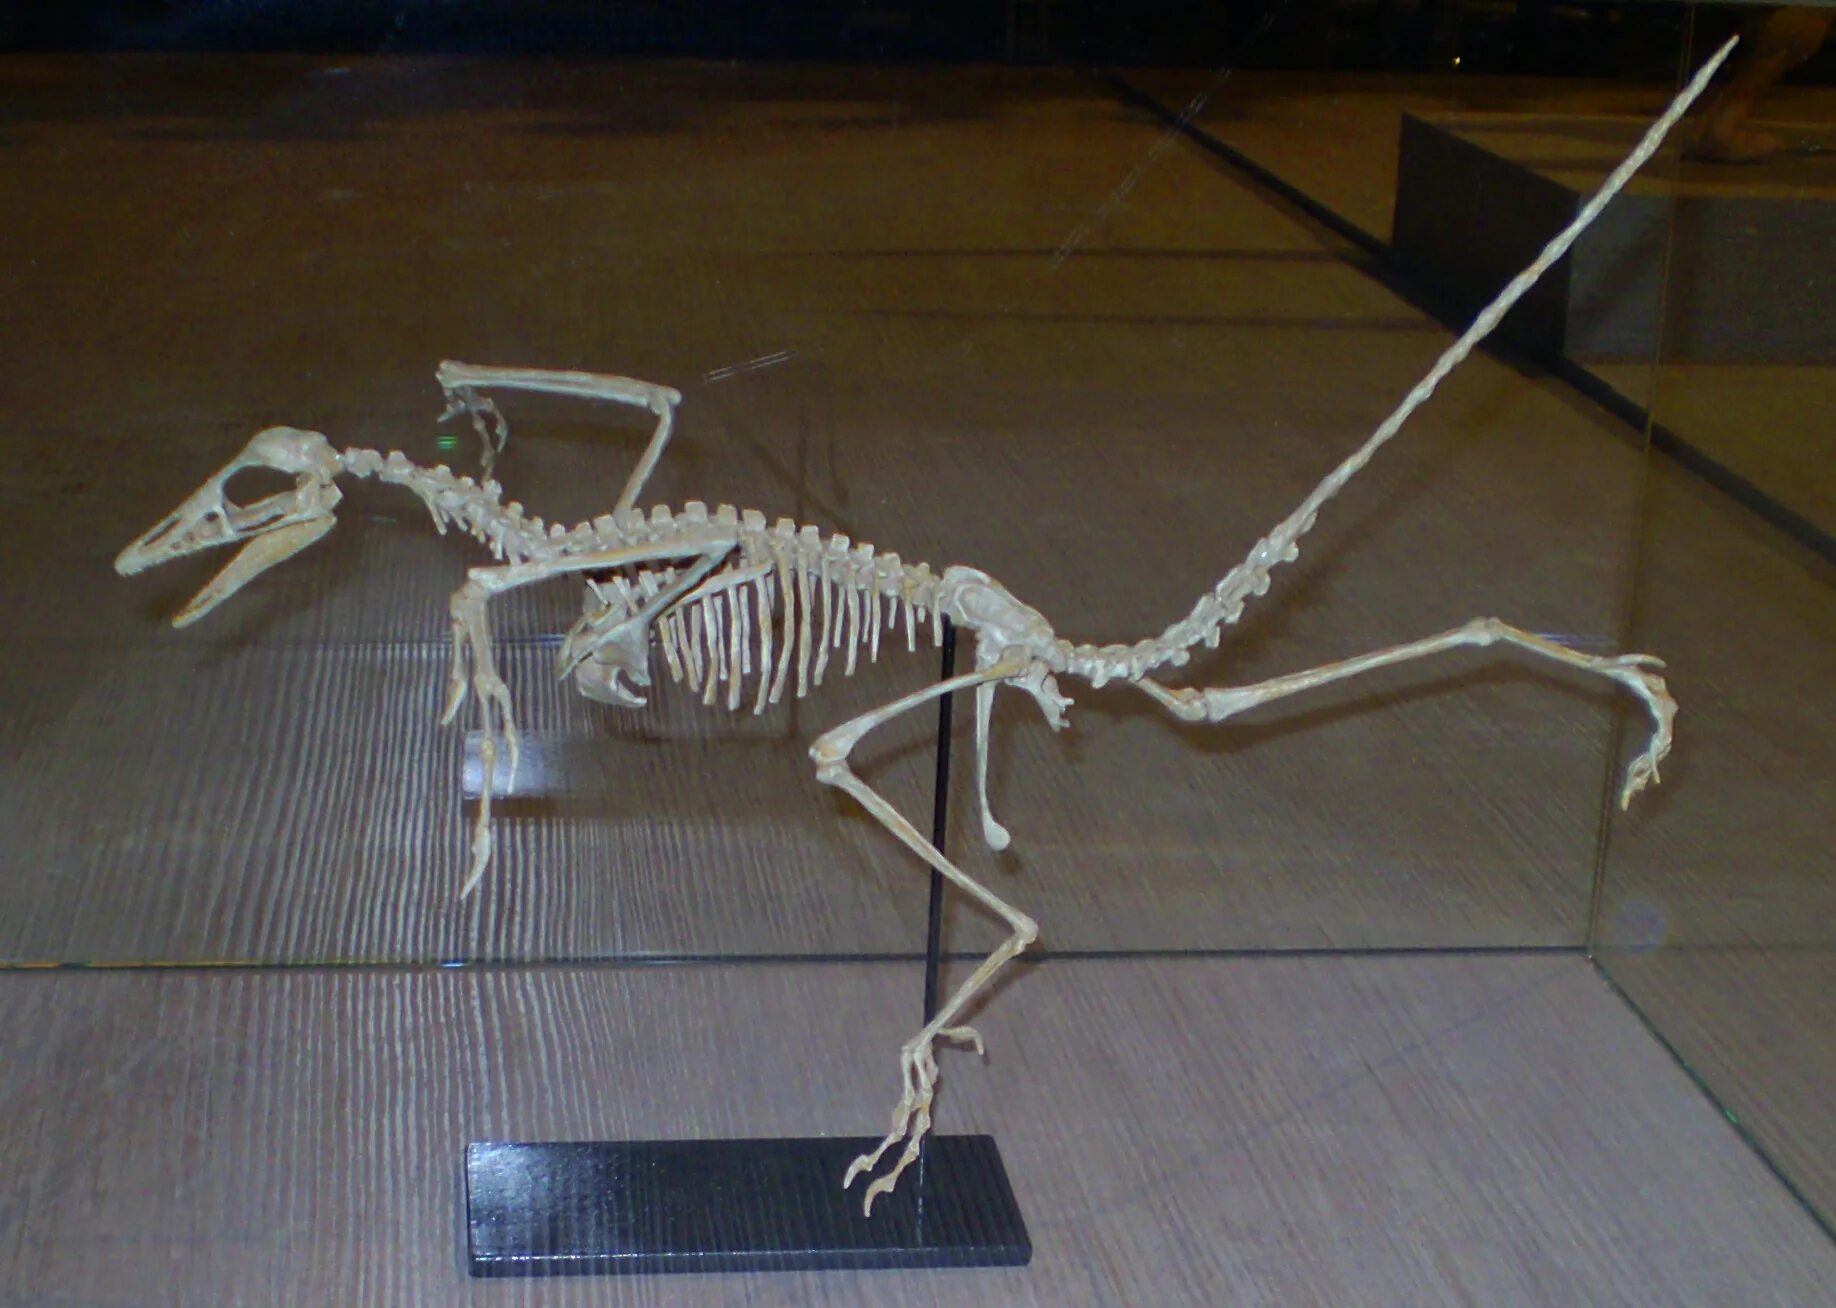 Археоптерикс скелет. Archaeopteryx скелет. Протоавис скелет. Скелет археоптерикса и птицы. Скелет археоптерикса